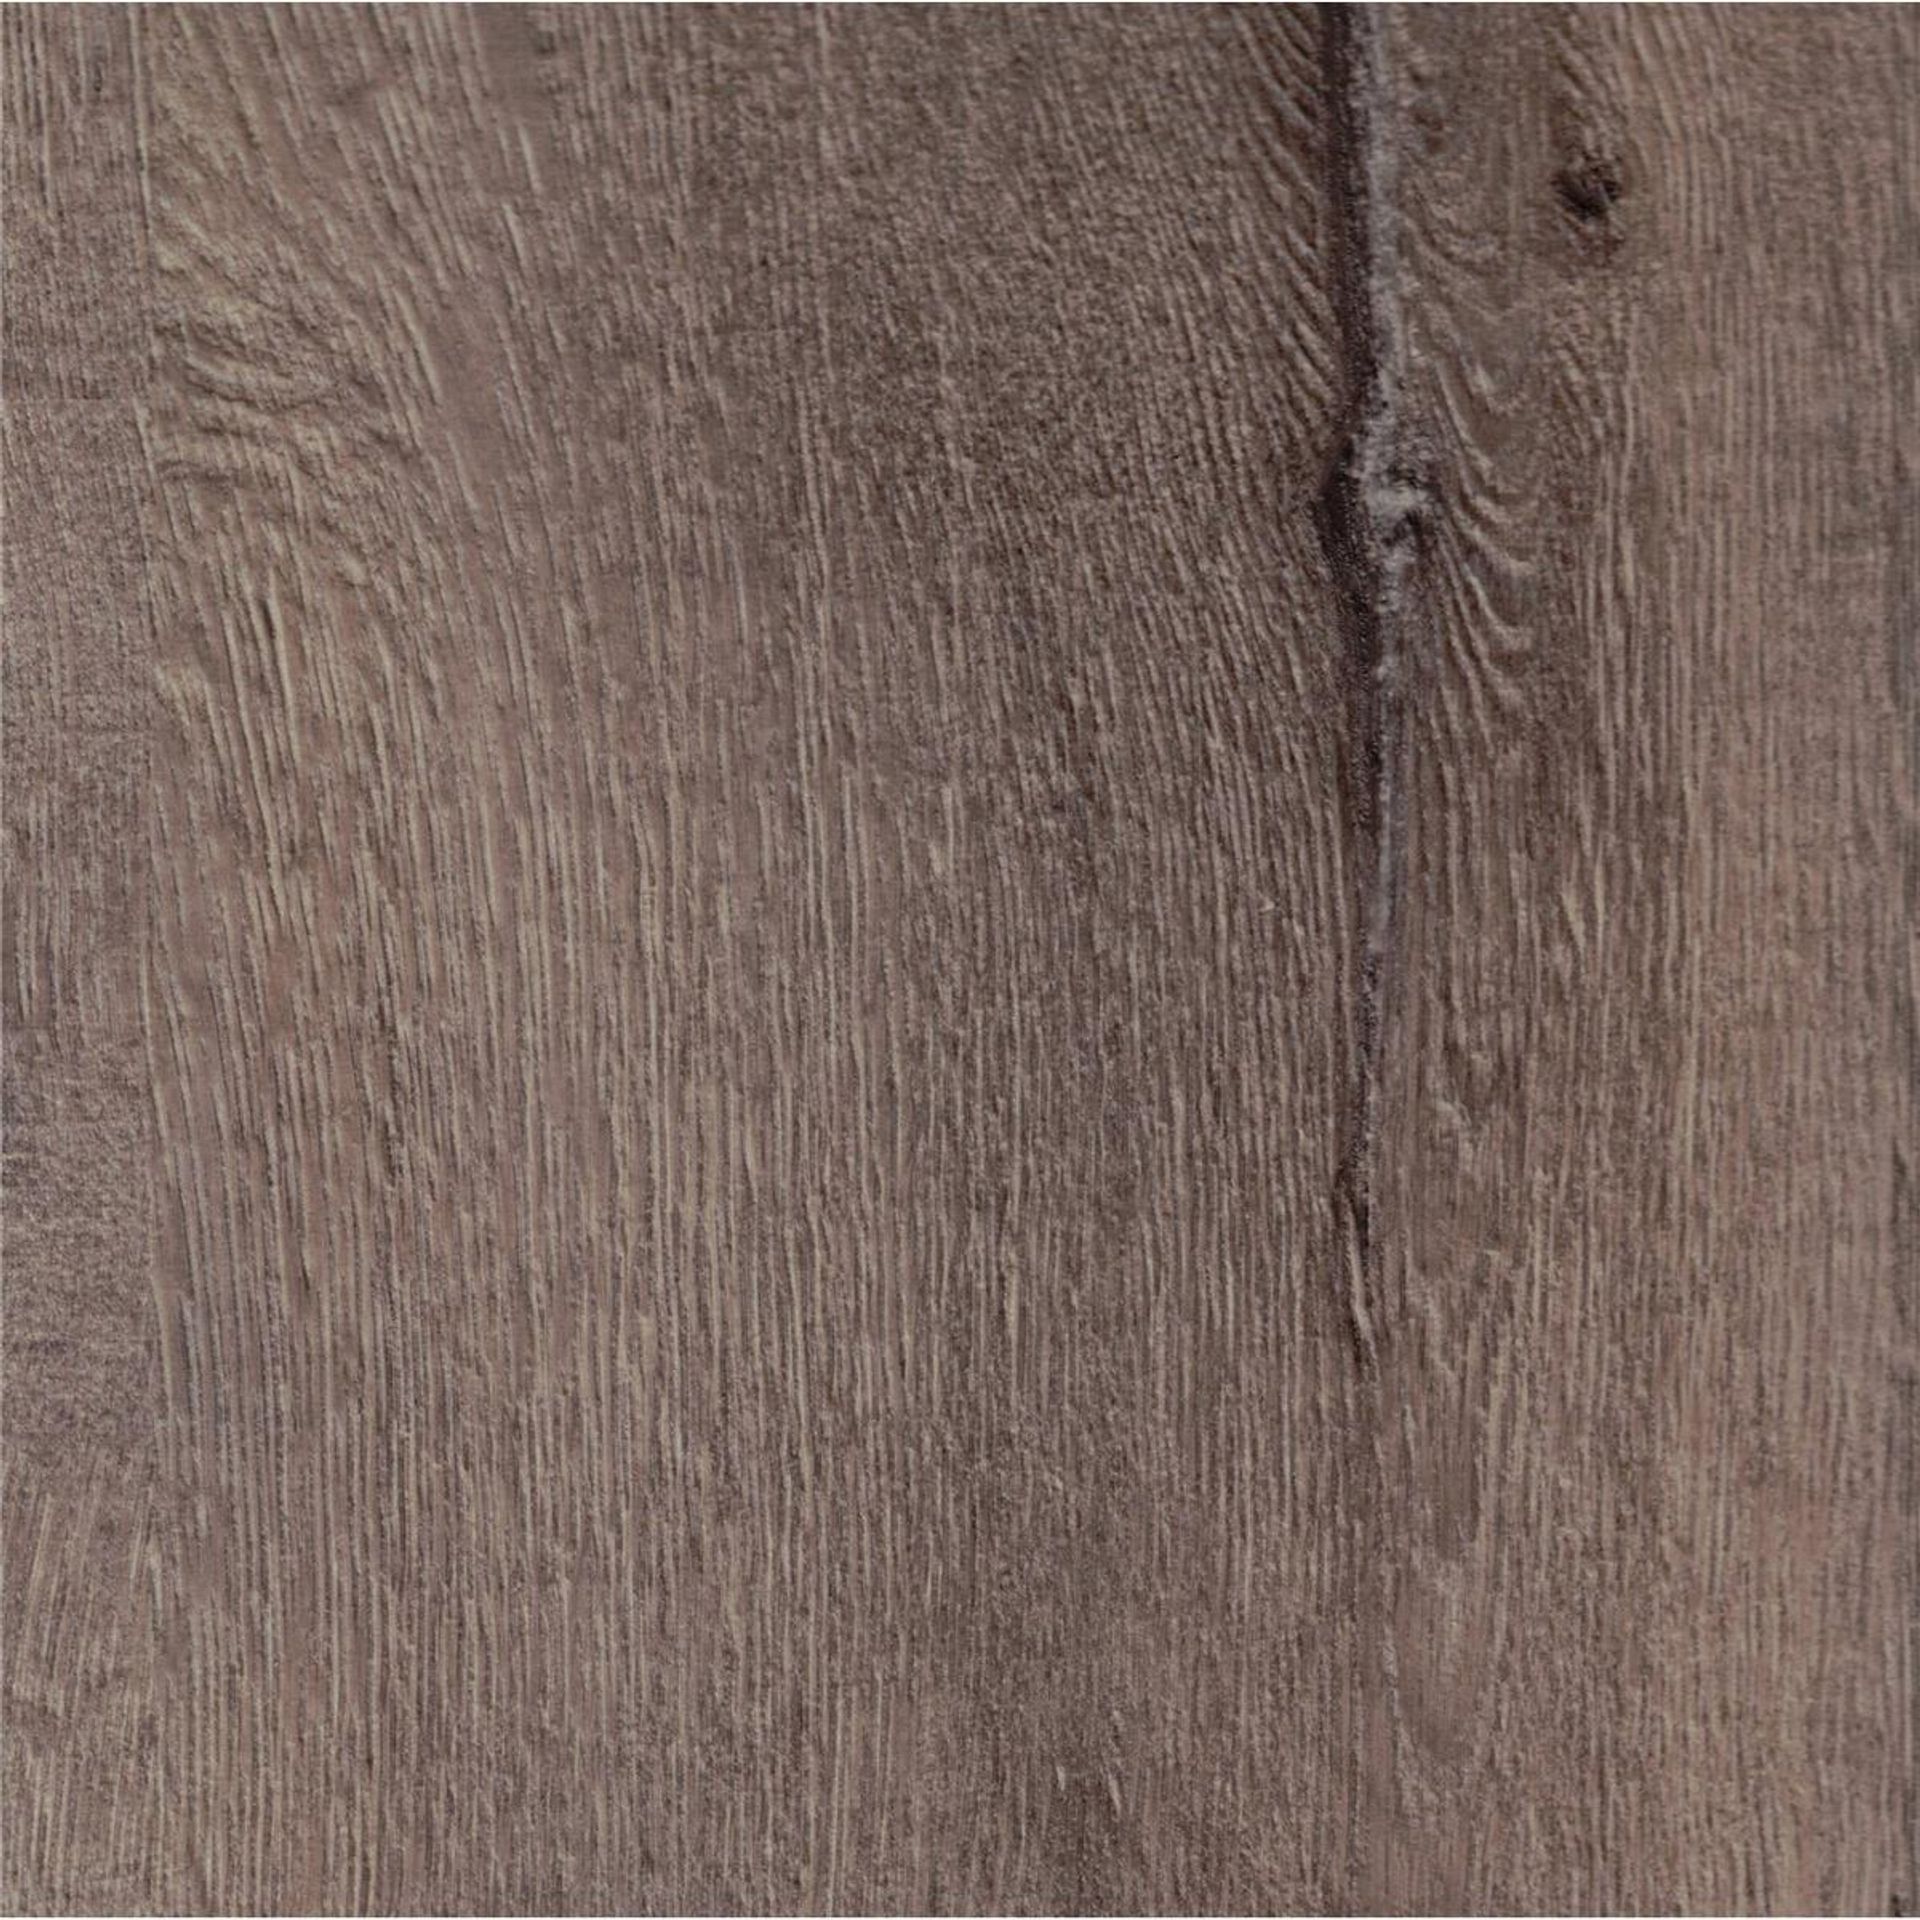 PVC-Industrieboden BITEO verdeckte Klickfliese IMO 70 dunkles Holz Design 660 mm x 330 mm - 8,2 mm Dicke